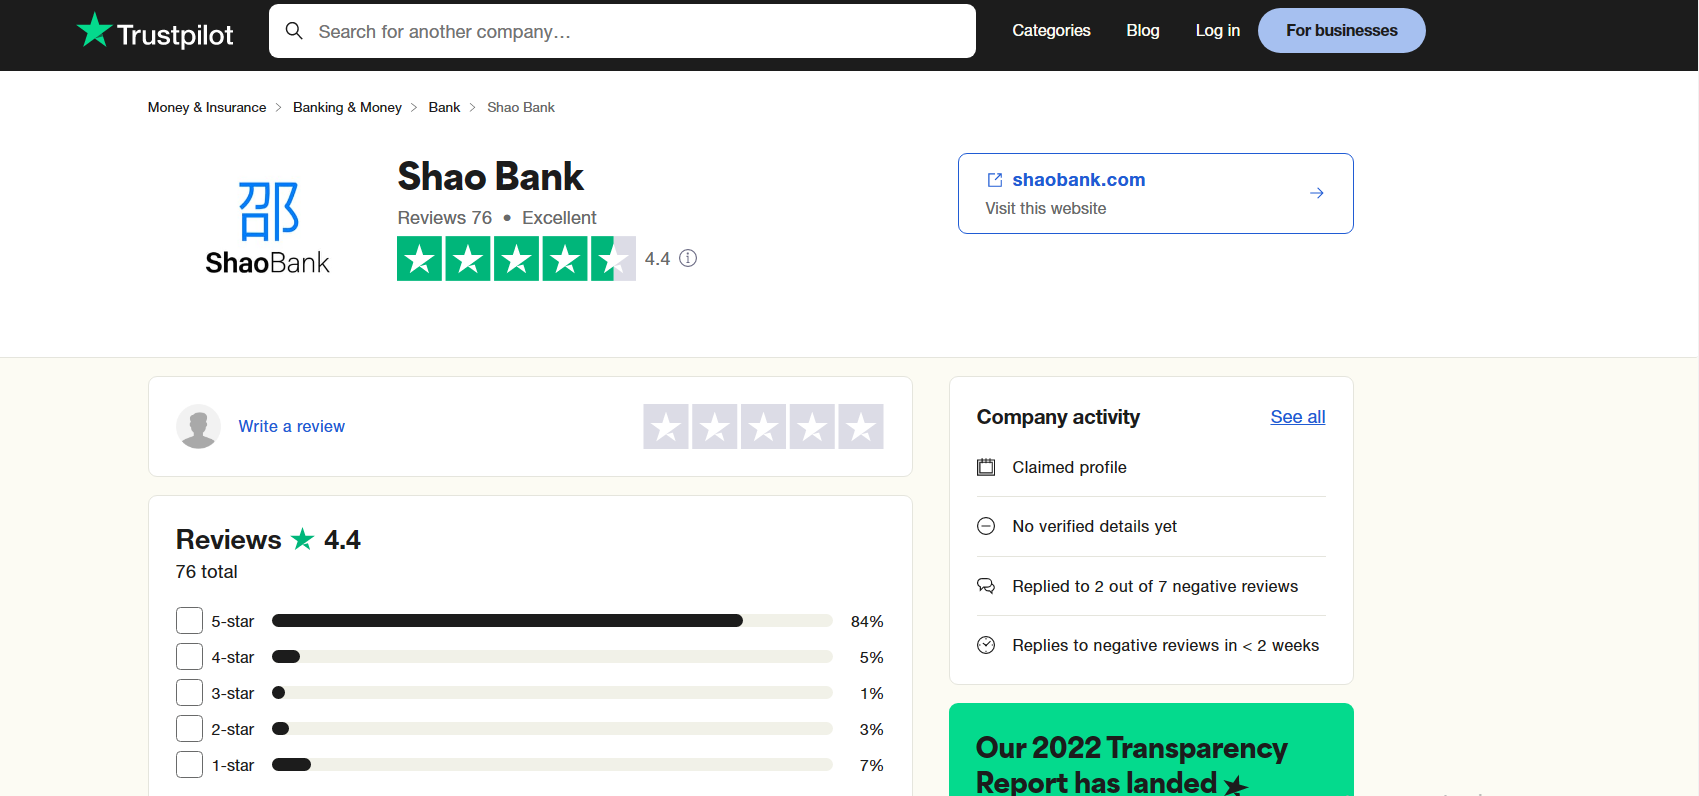 shao bank reviews on Trustpilot